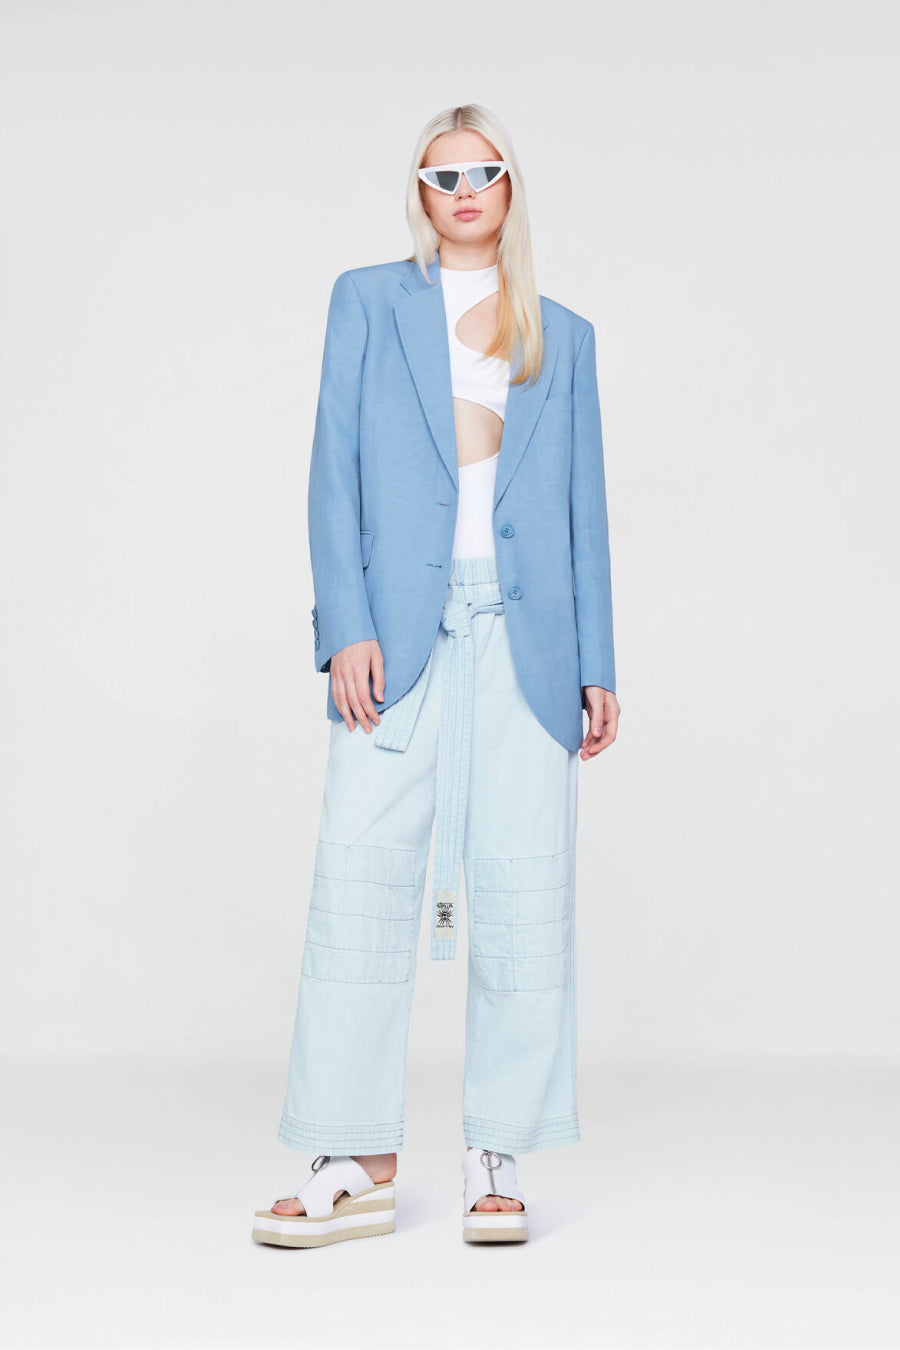 Stella McCartney Twill Tailoring Blazer - Cornflower Blue